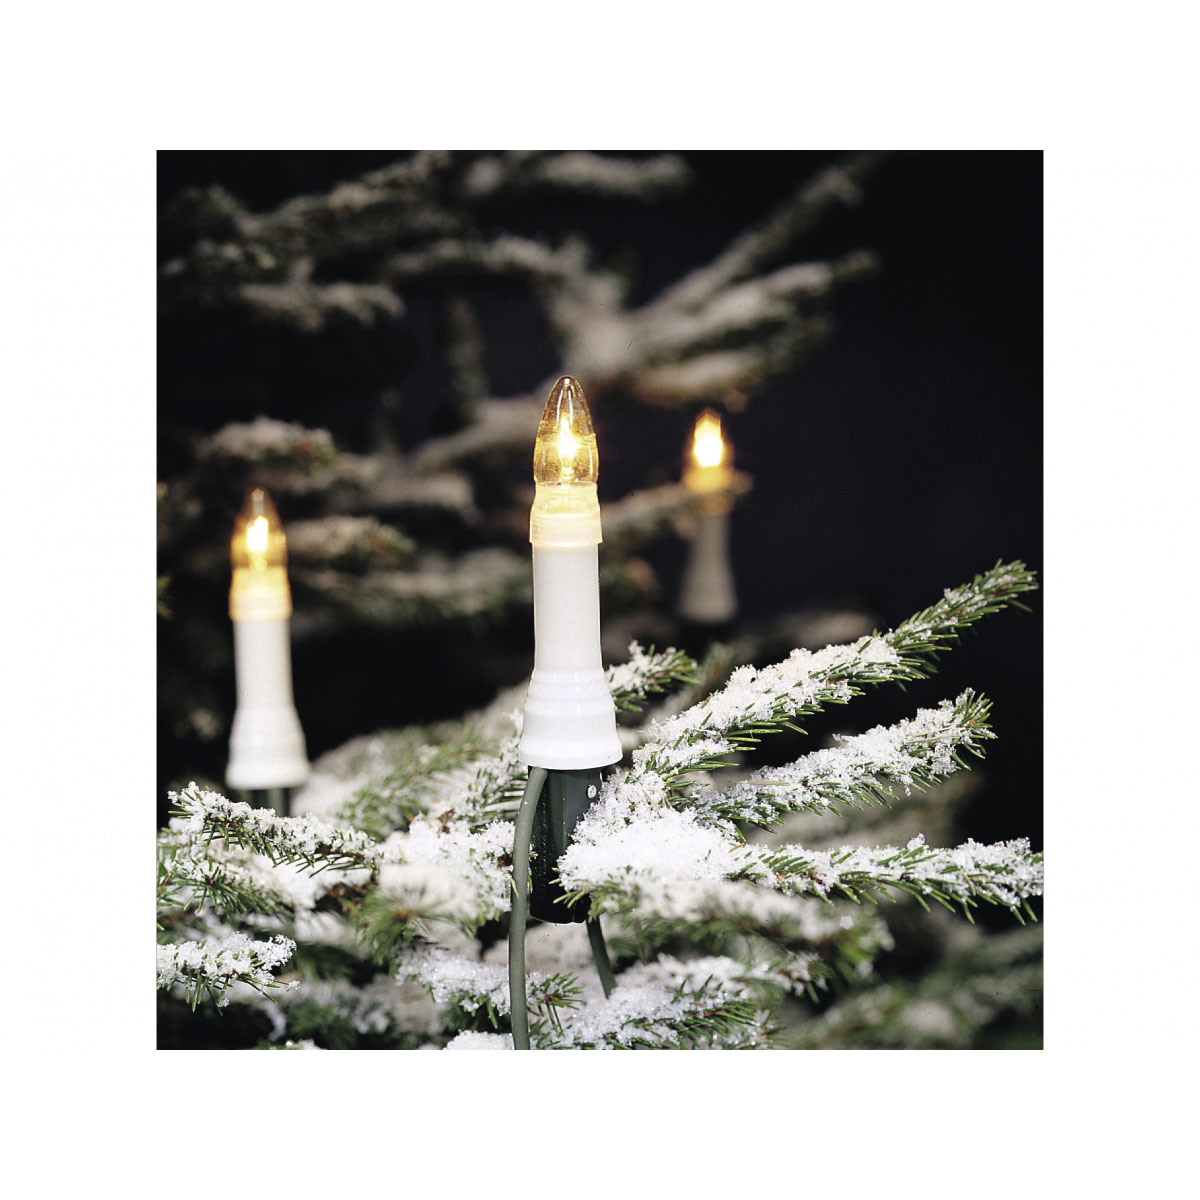 Konstsmide Baumkette mit Schaftkerzen 16 Kerzen warmweiß | 371819